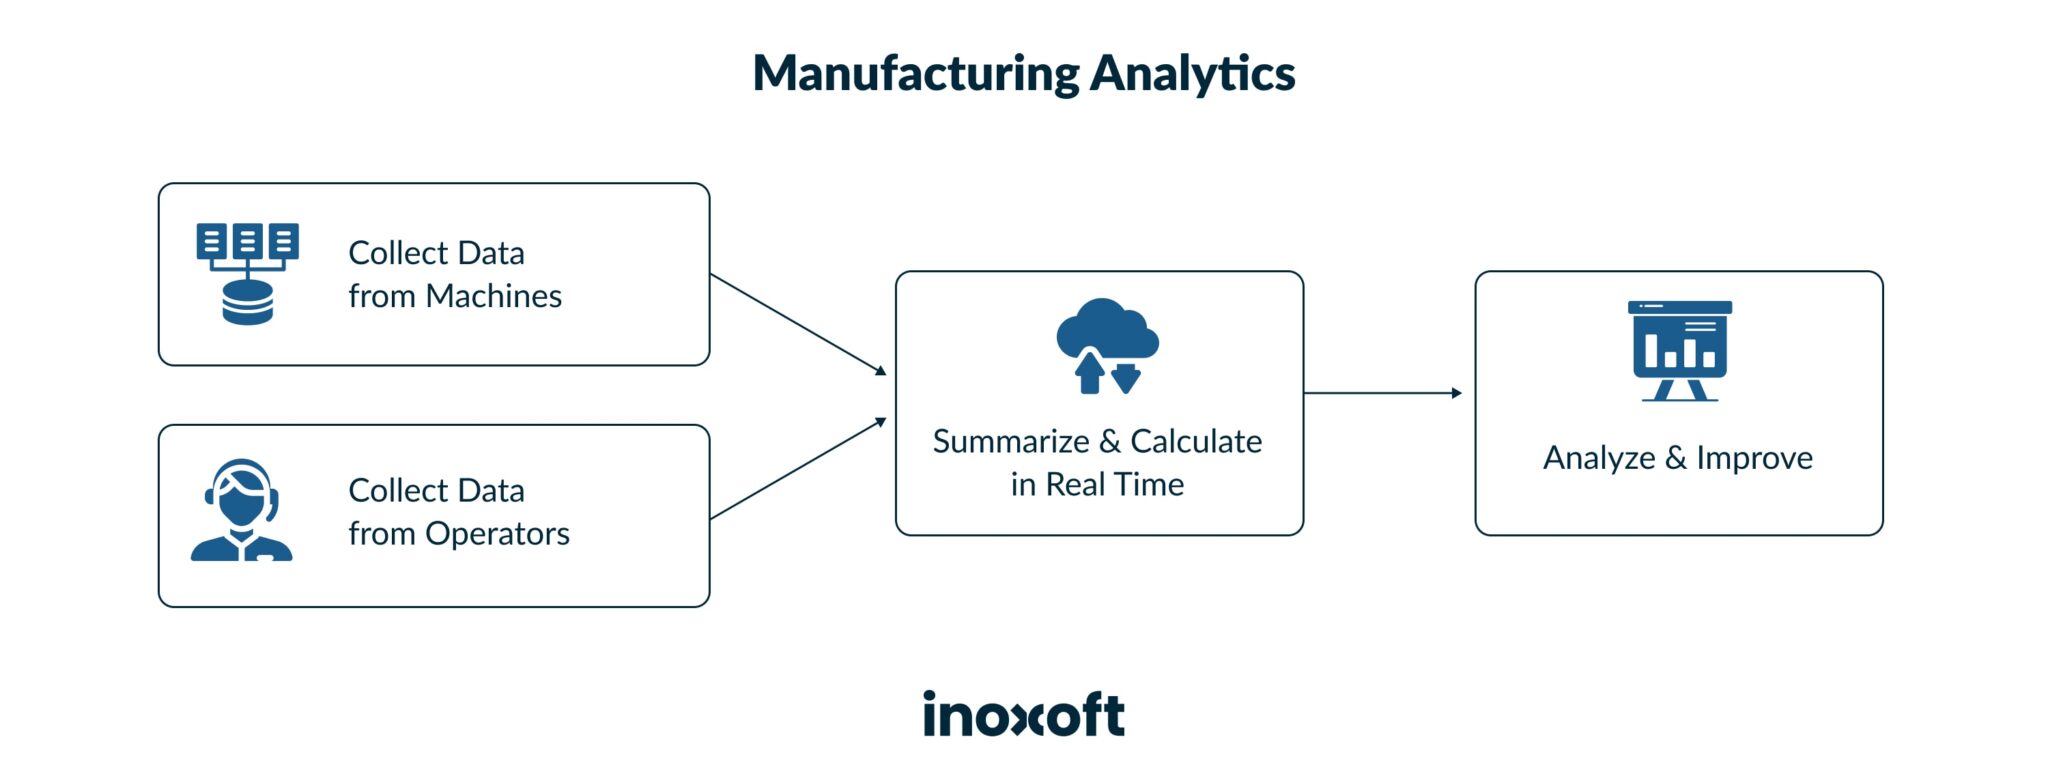 Manufacturing Analytics Process